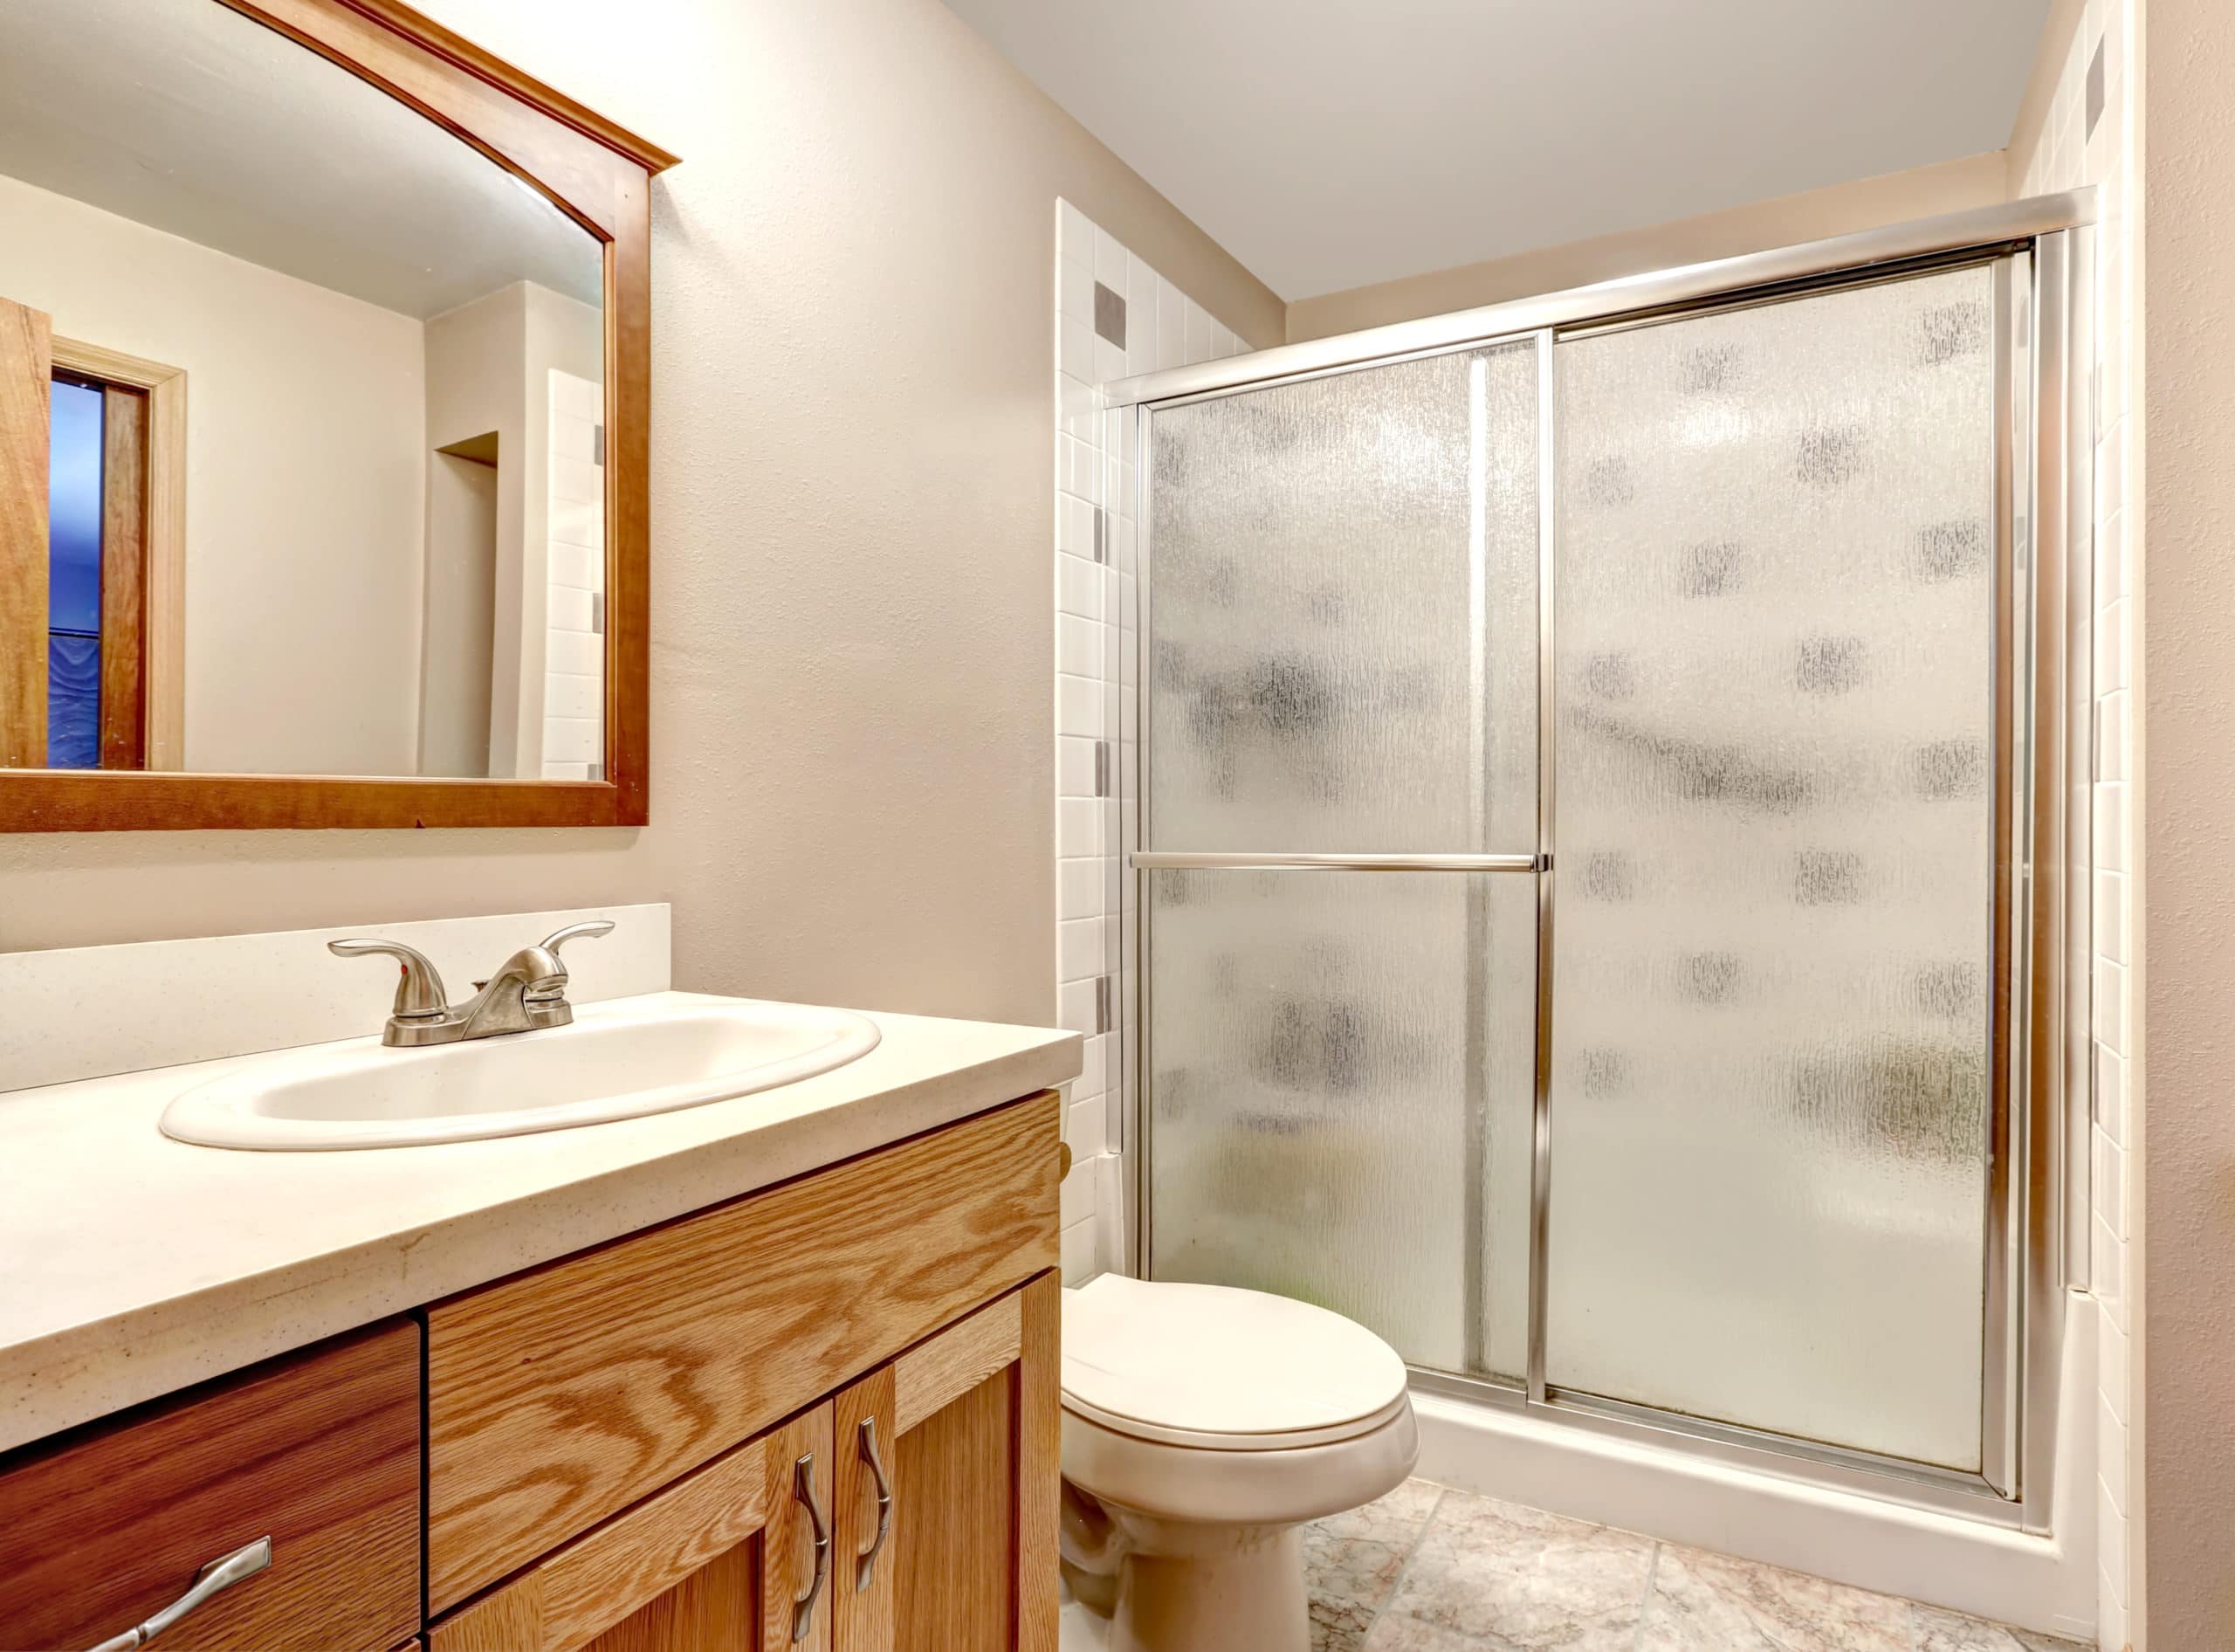 Bathroom interior with cabinet and glass door shower